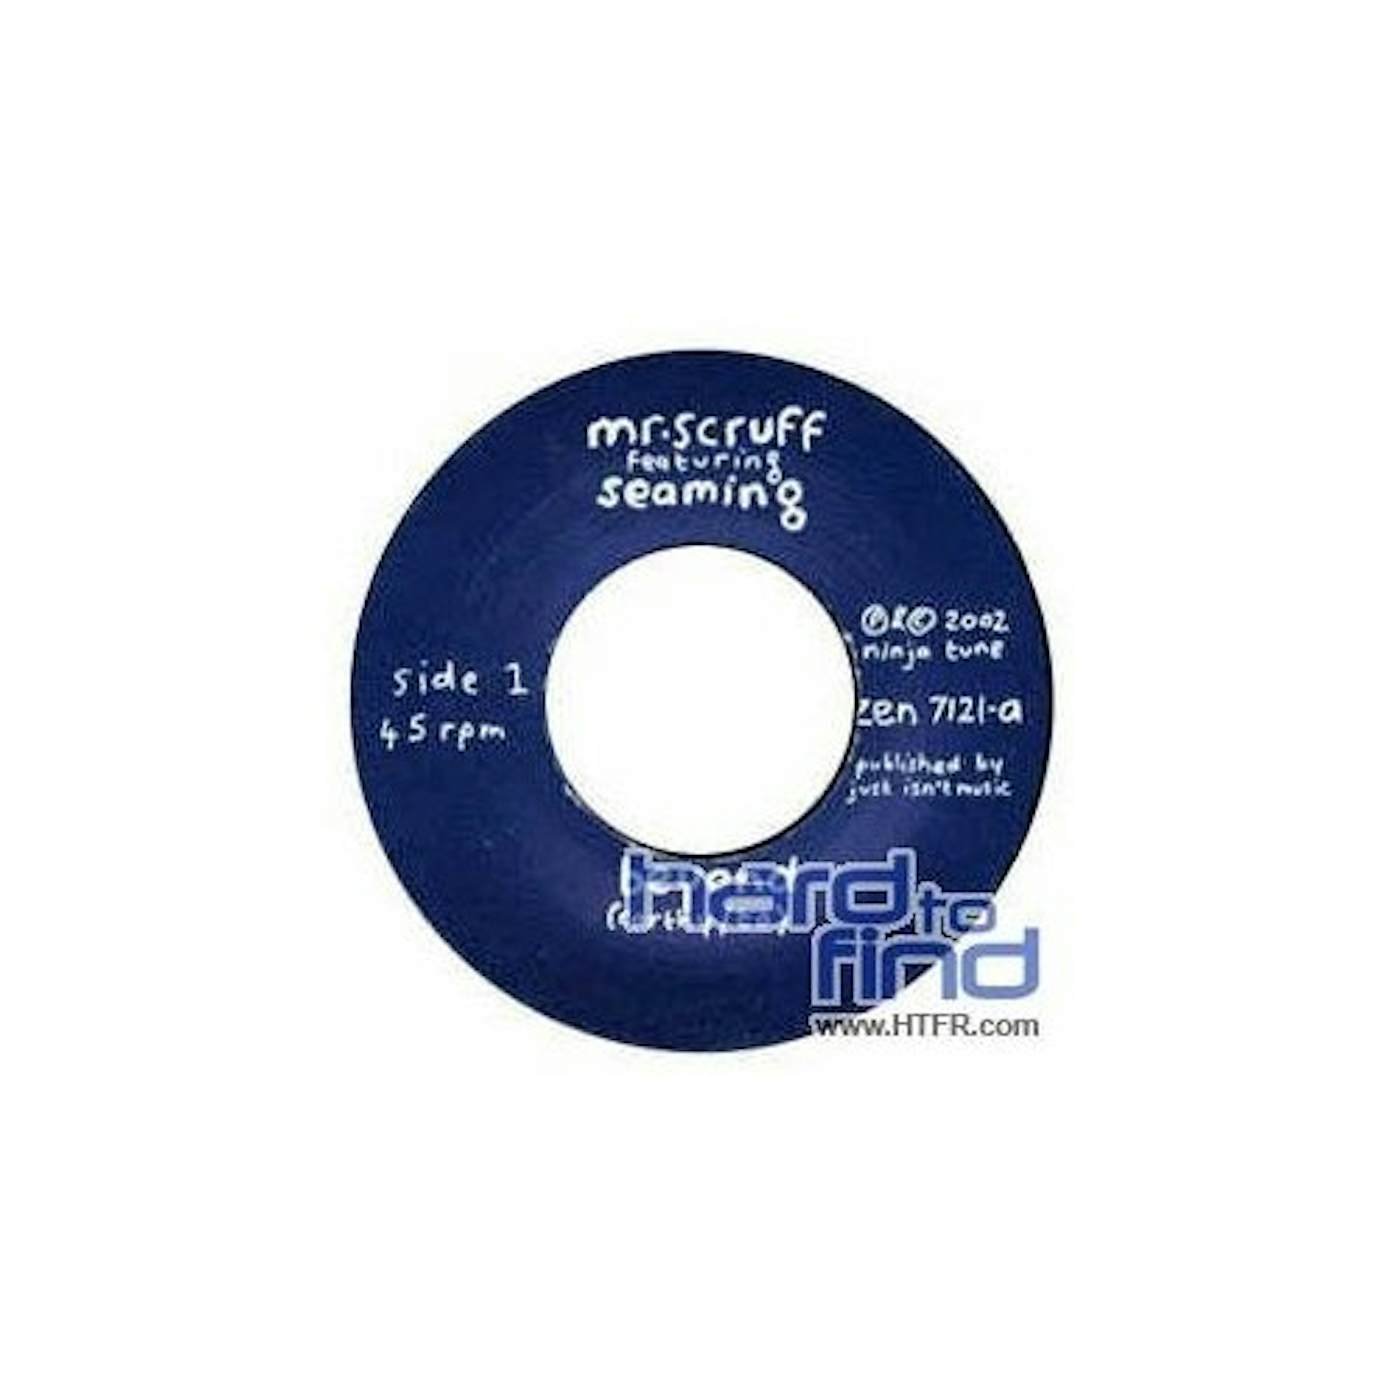 Mr. Scruff BEYOND / CHAMPION NIBBLE Vinyl Record